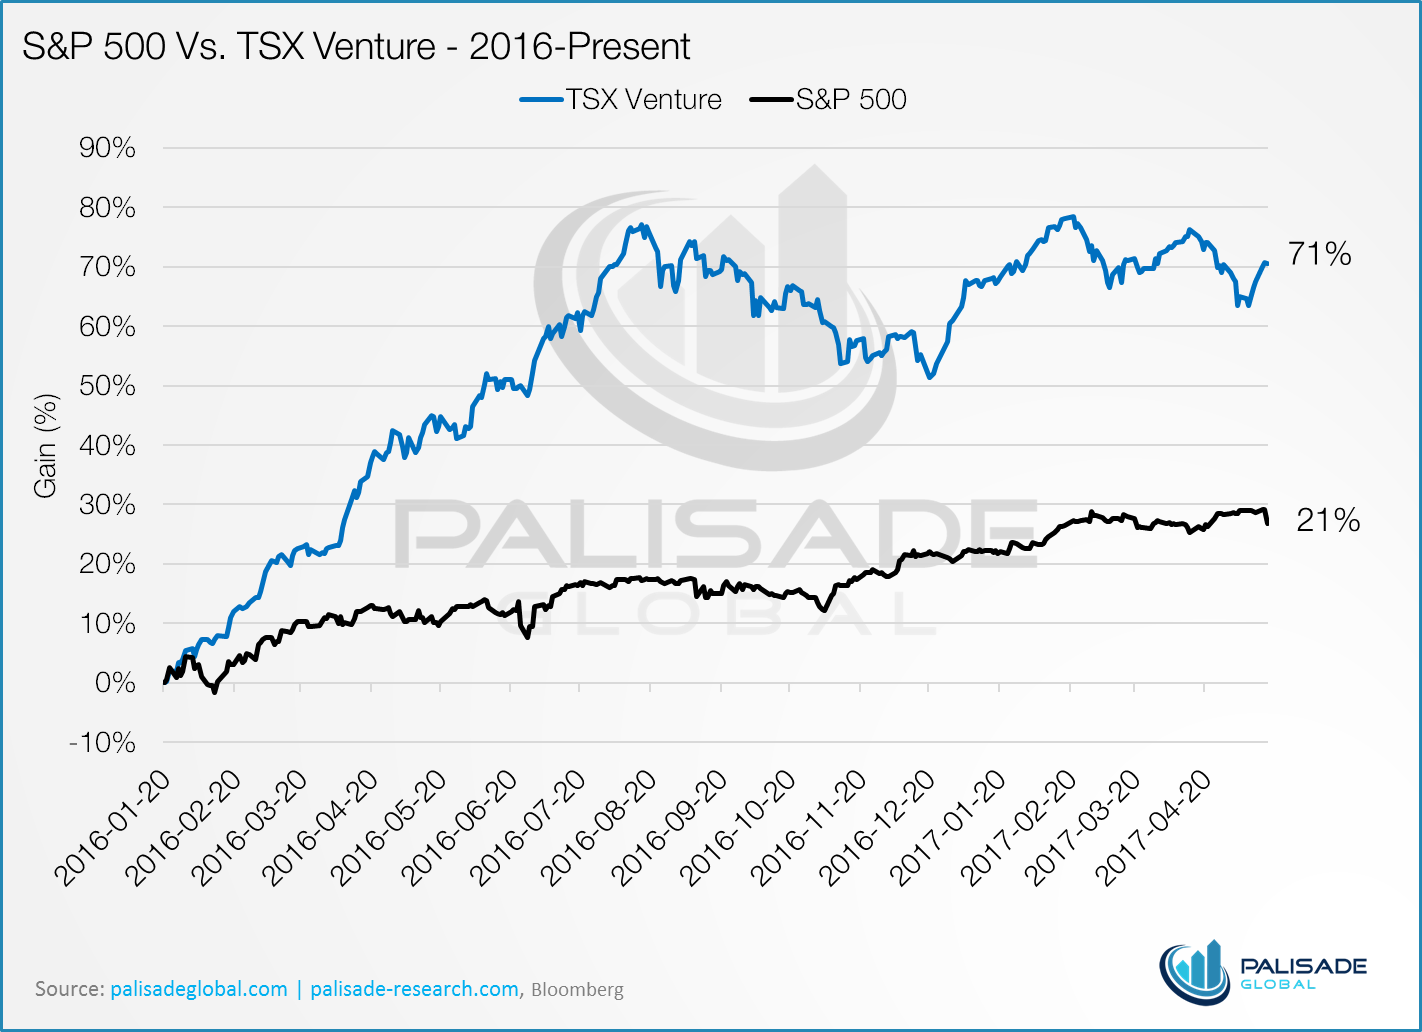 S&P 500 vs TSX Venture - 2016 to Present